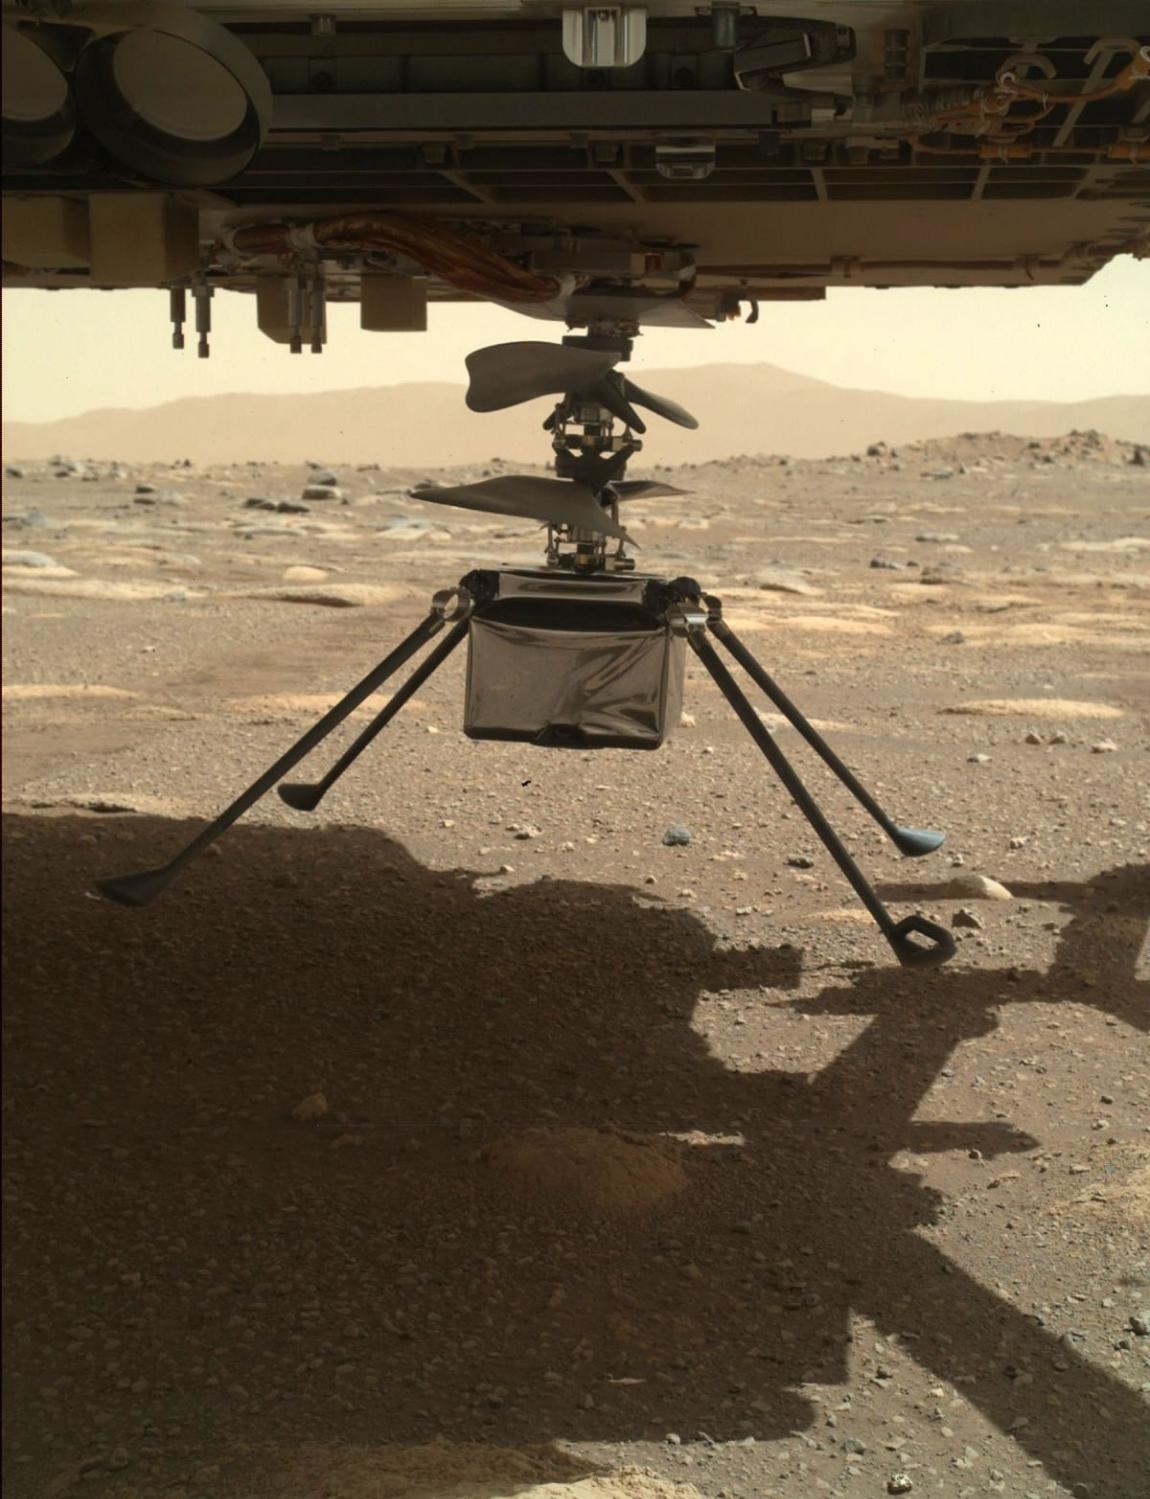 “Ingenuity”直升机成功站立在火星表面